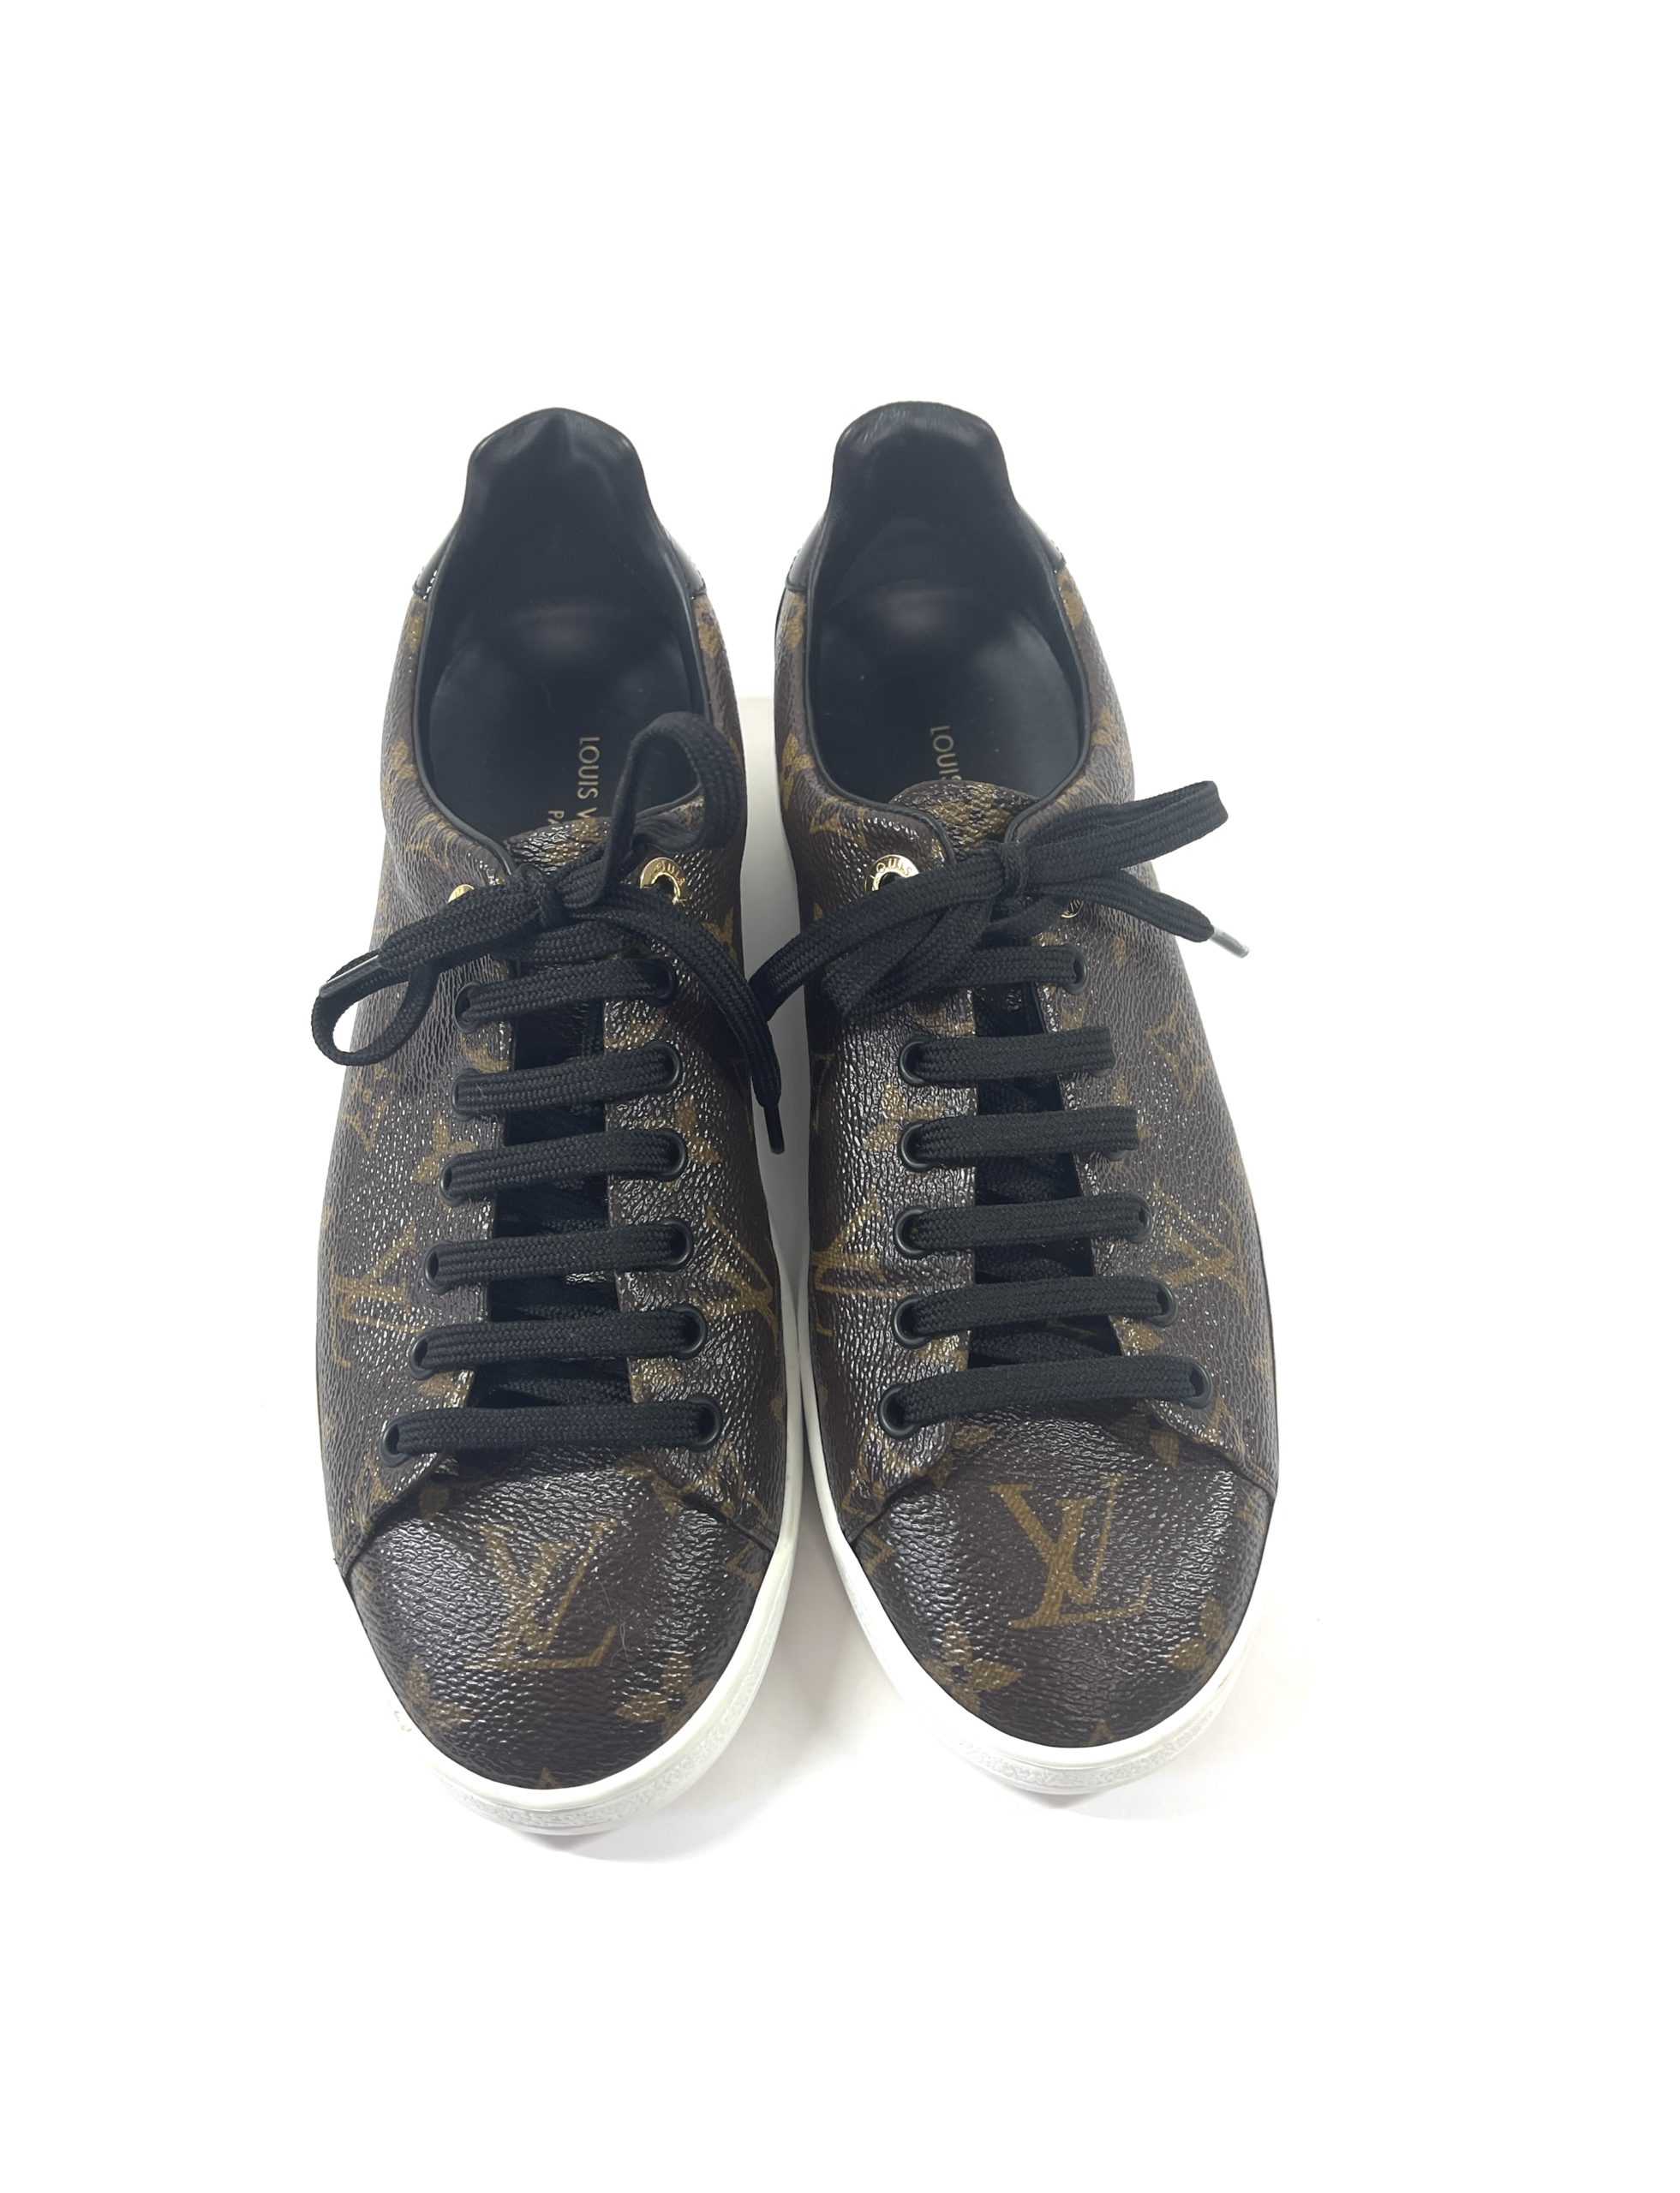 Louis Vuitton Monogram Sneakers and Louis Vuitton Black Thong